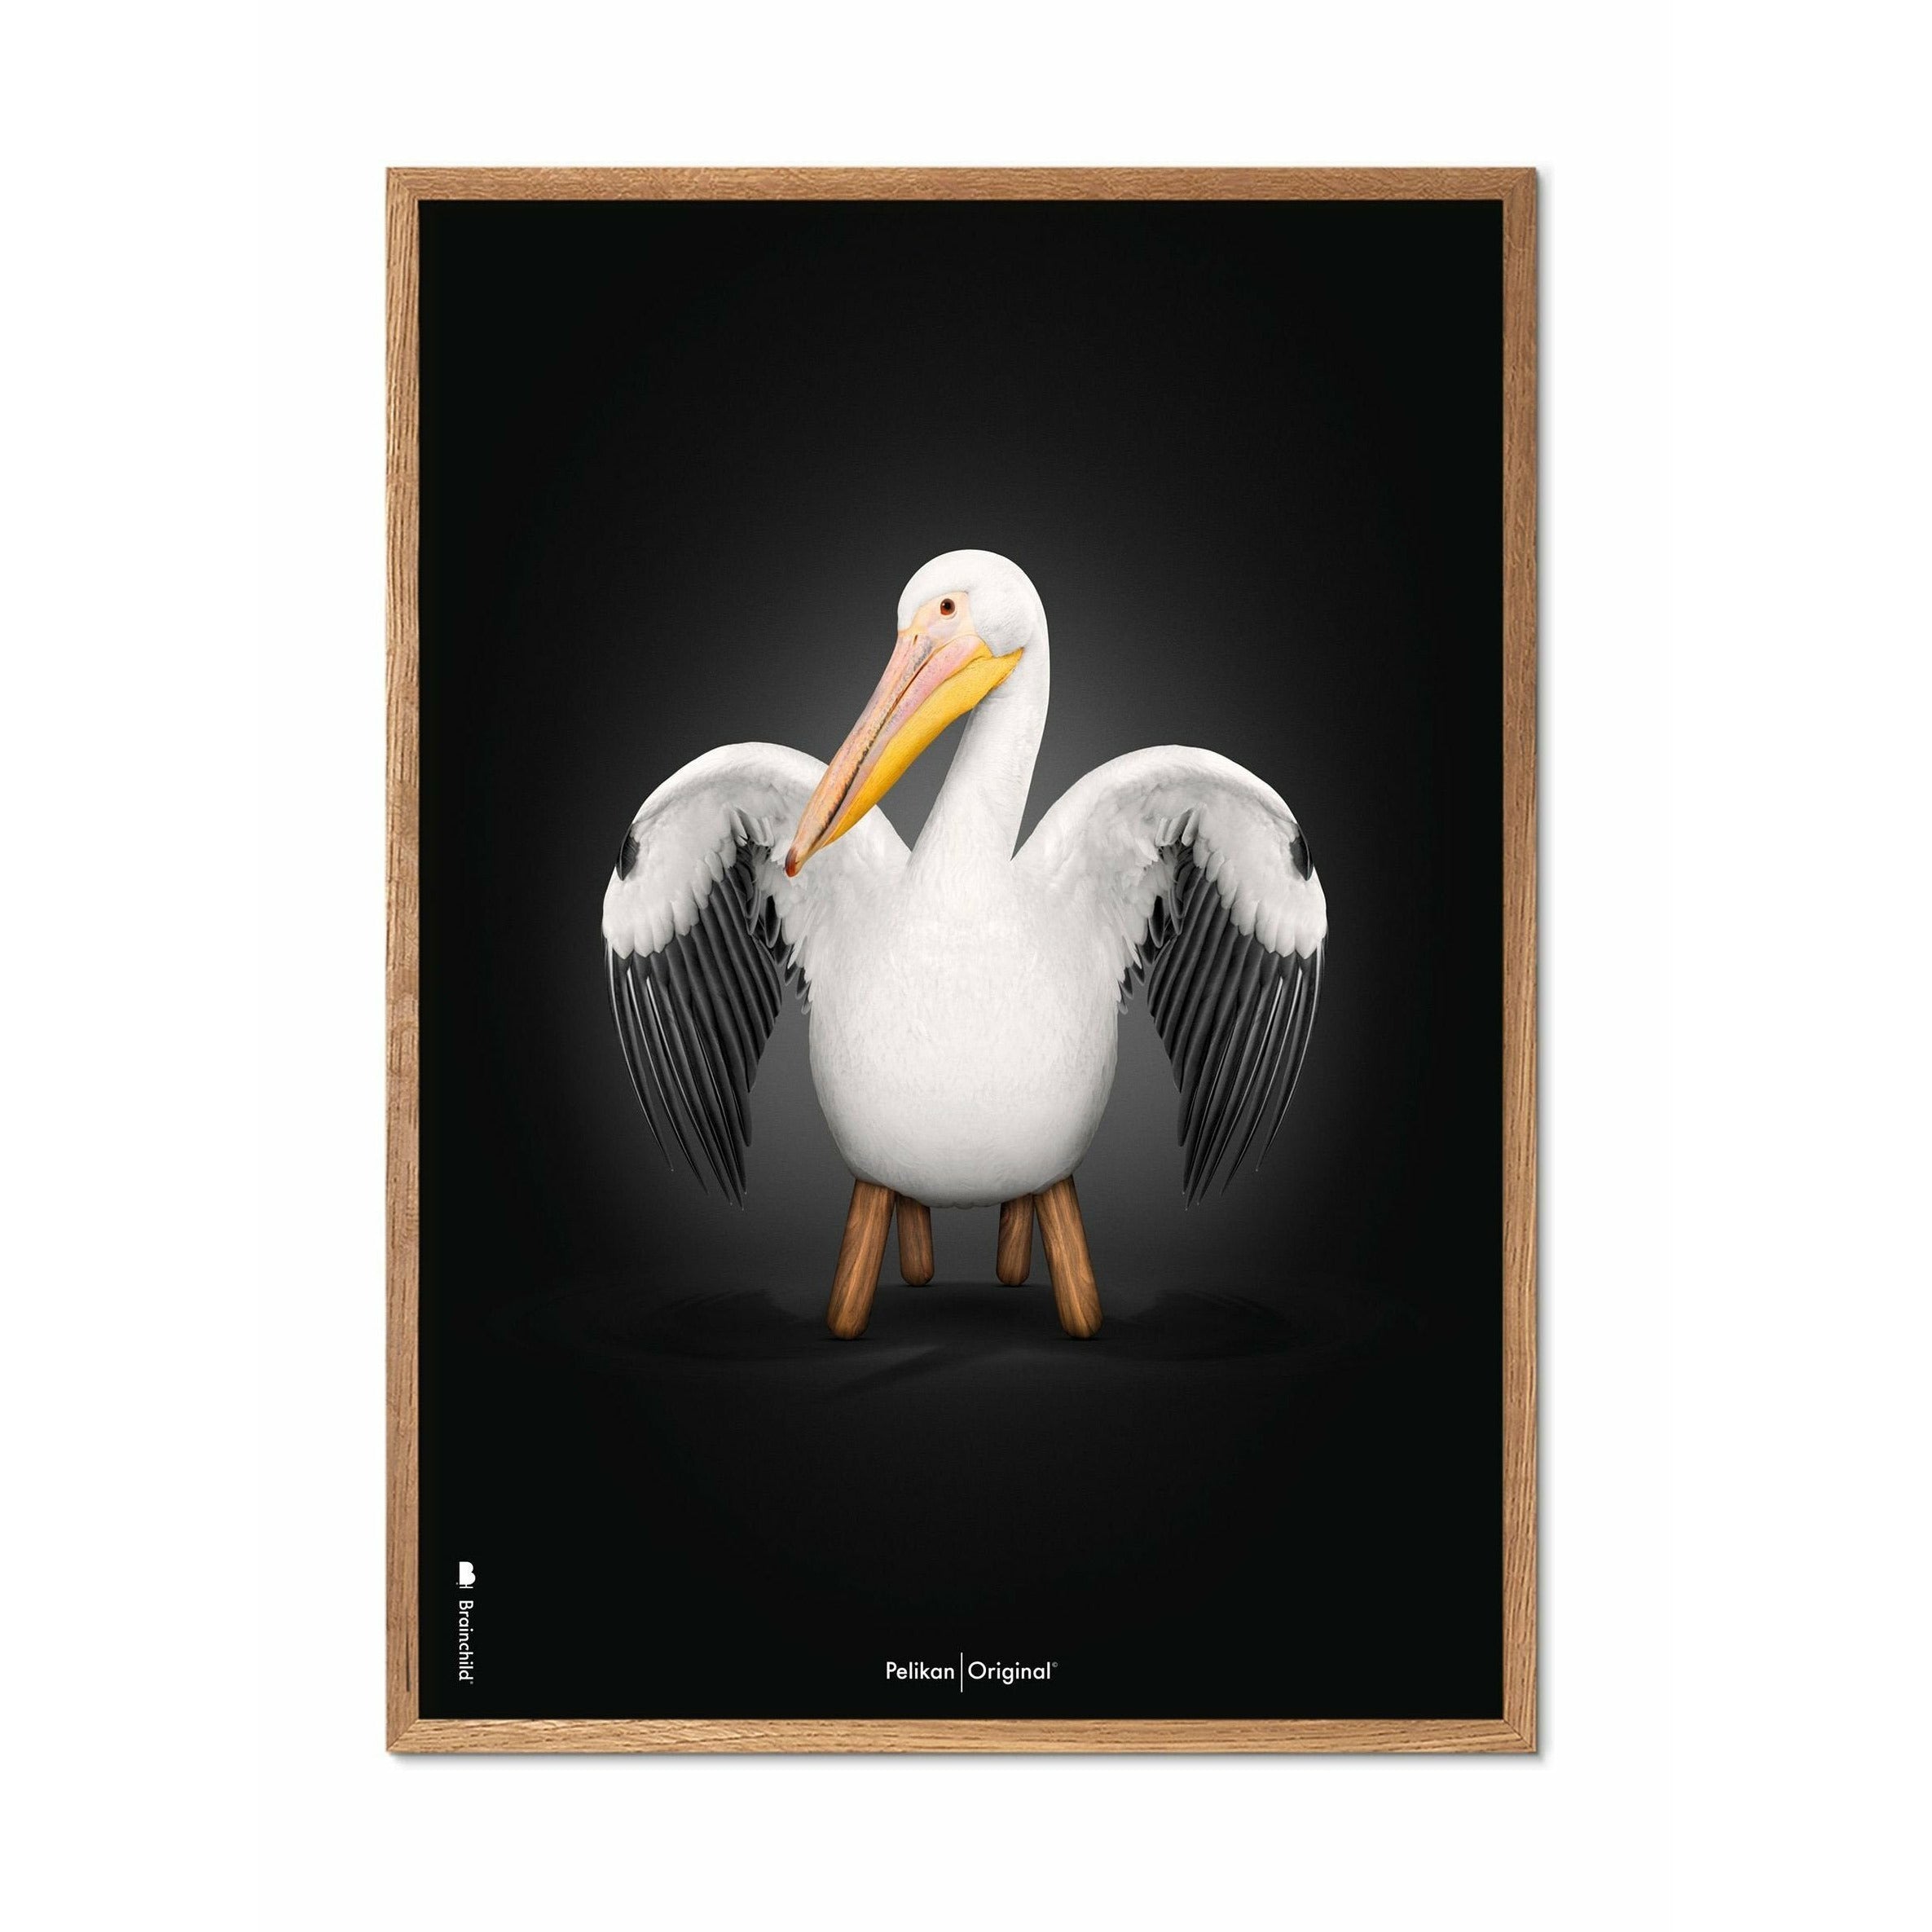 Brainchild Pelikan Classic Poster, Frame Made Of Light Wood 30x40 Cm, Black Background